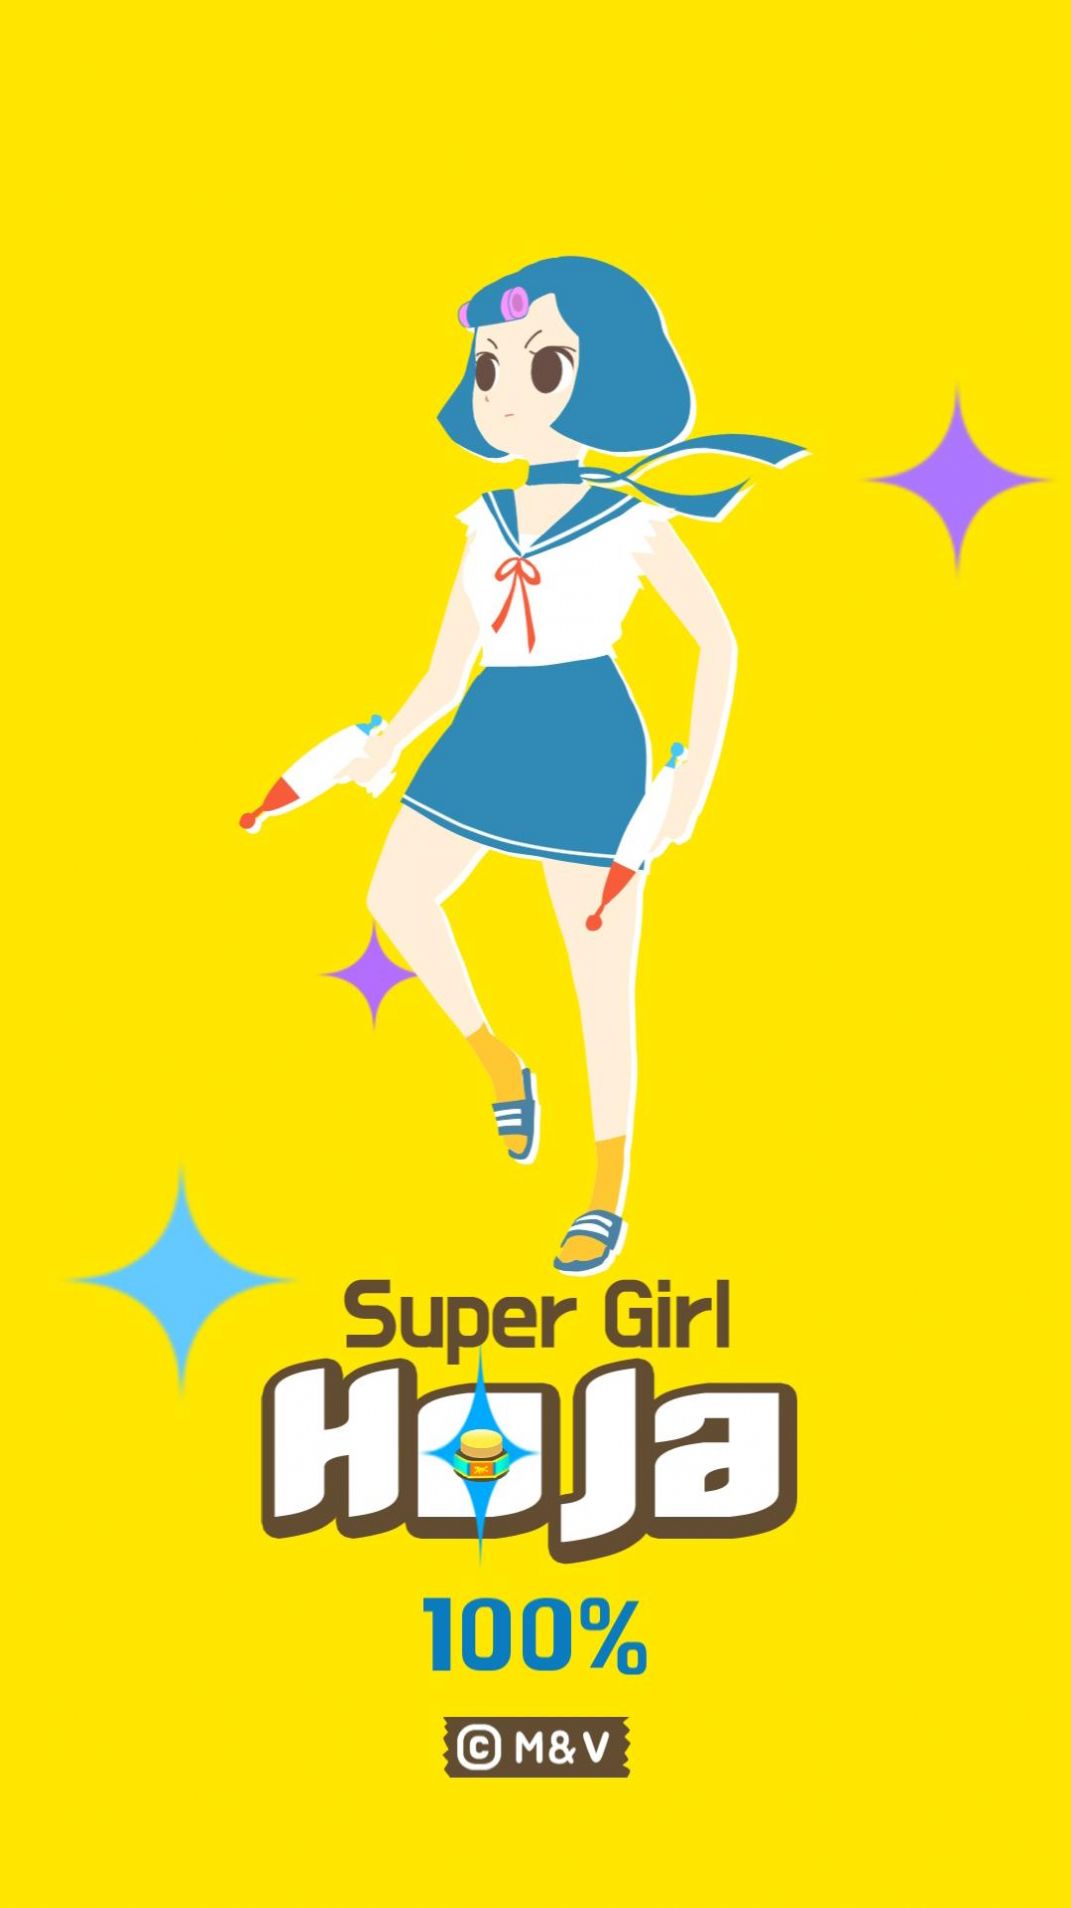 Super Girl HOJA（美少女大战恶龙）